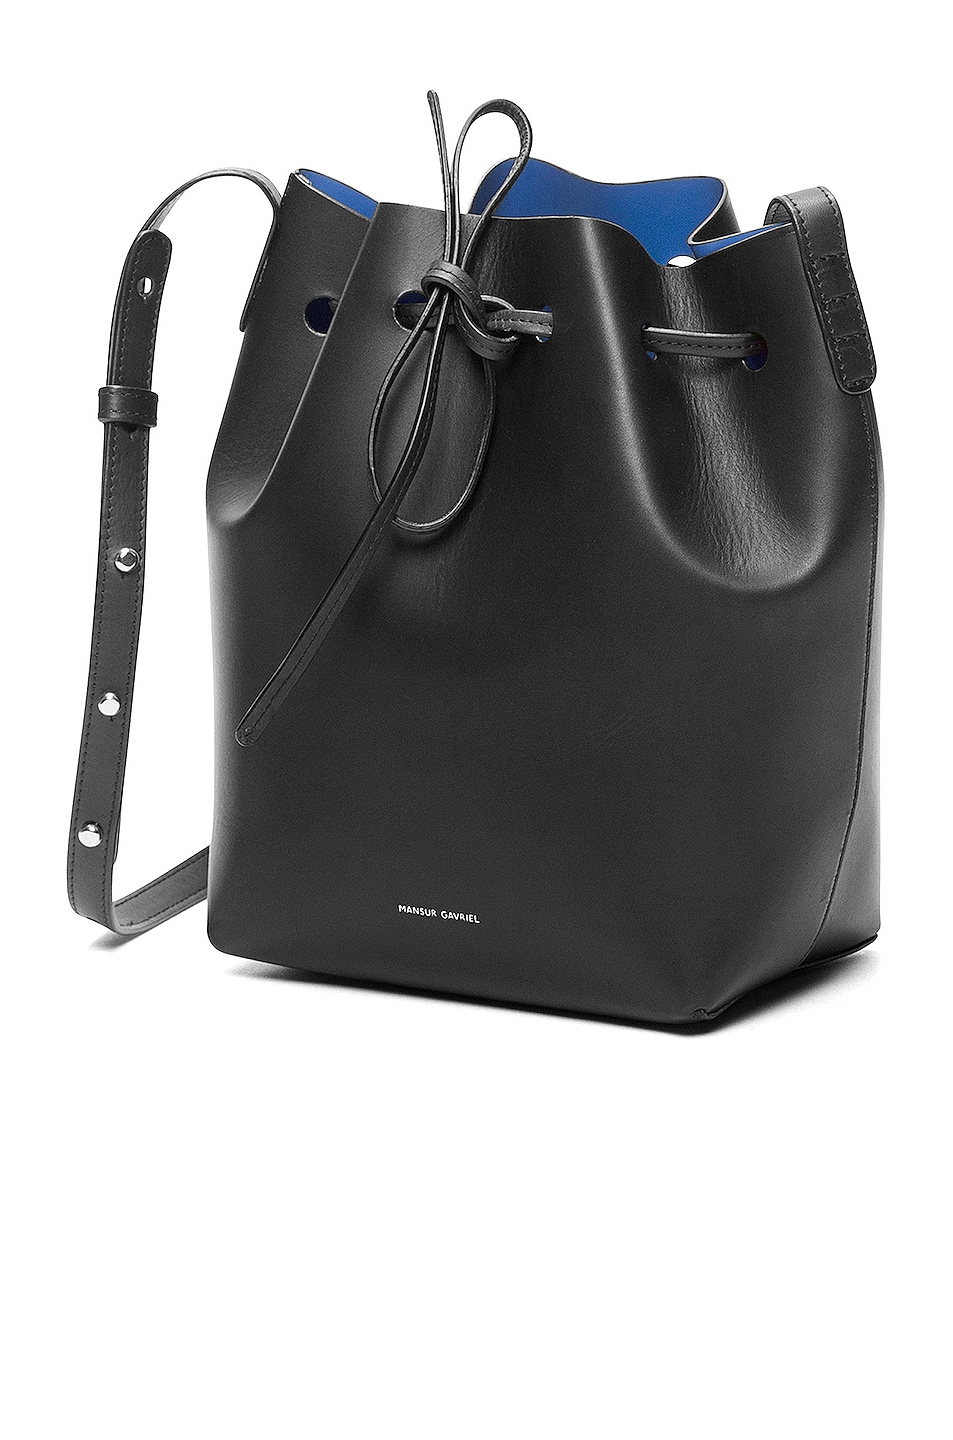 Mansur Gavriel Coated Mini Bucket Bag in Black & Royal | FWRD